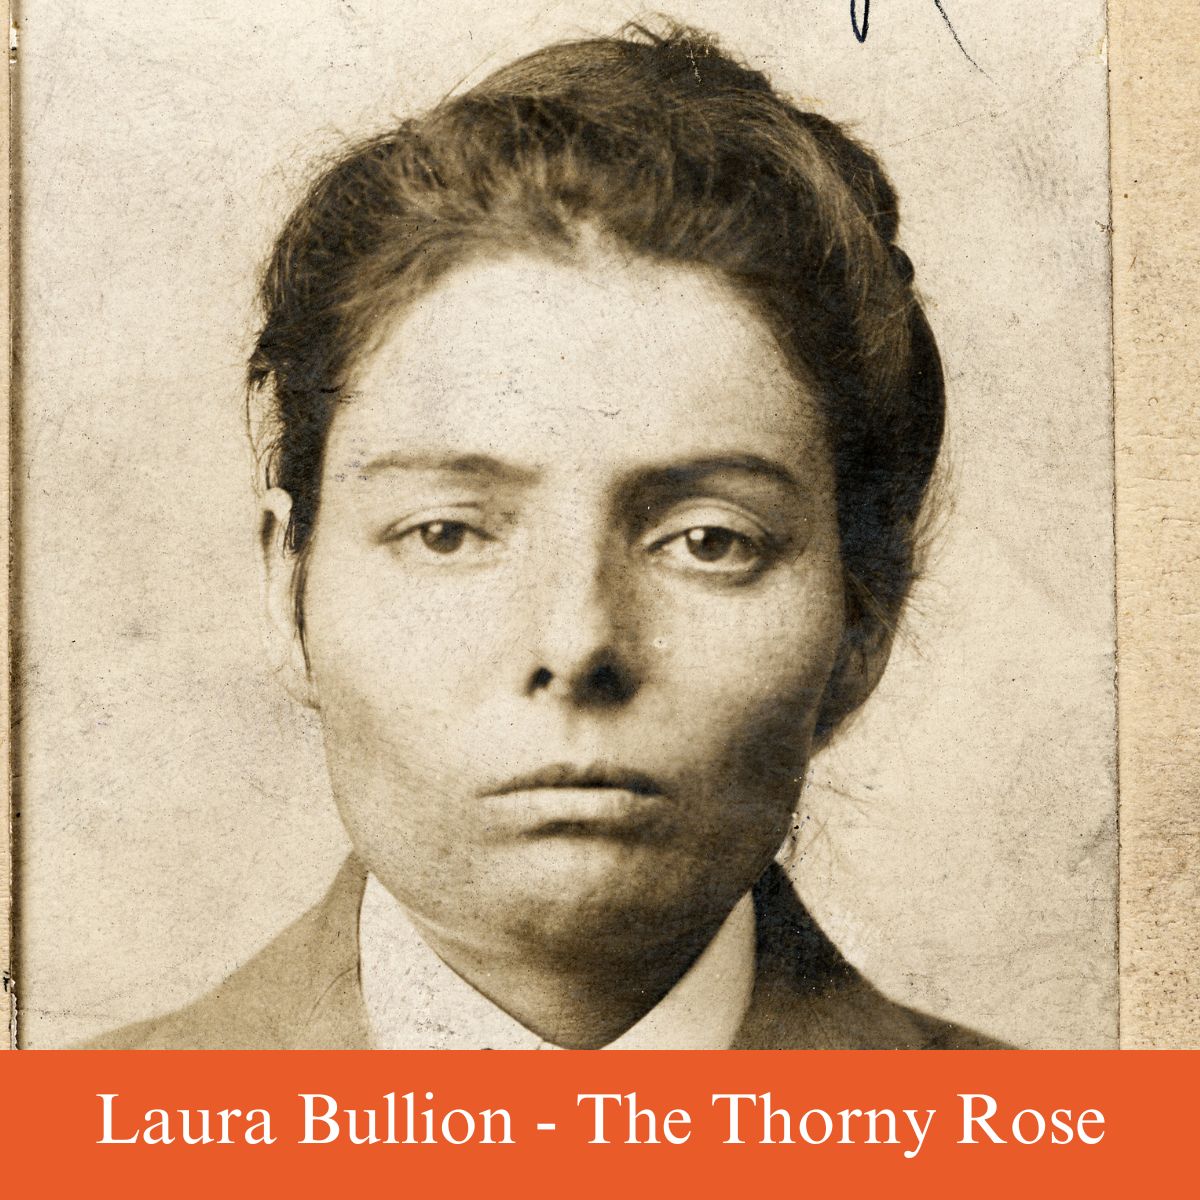 laura bullion thorny rose